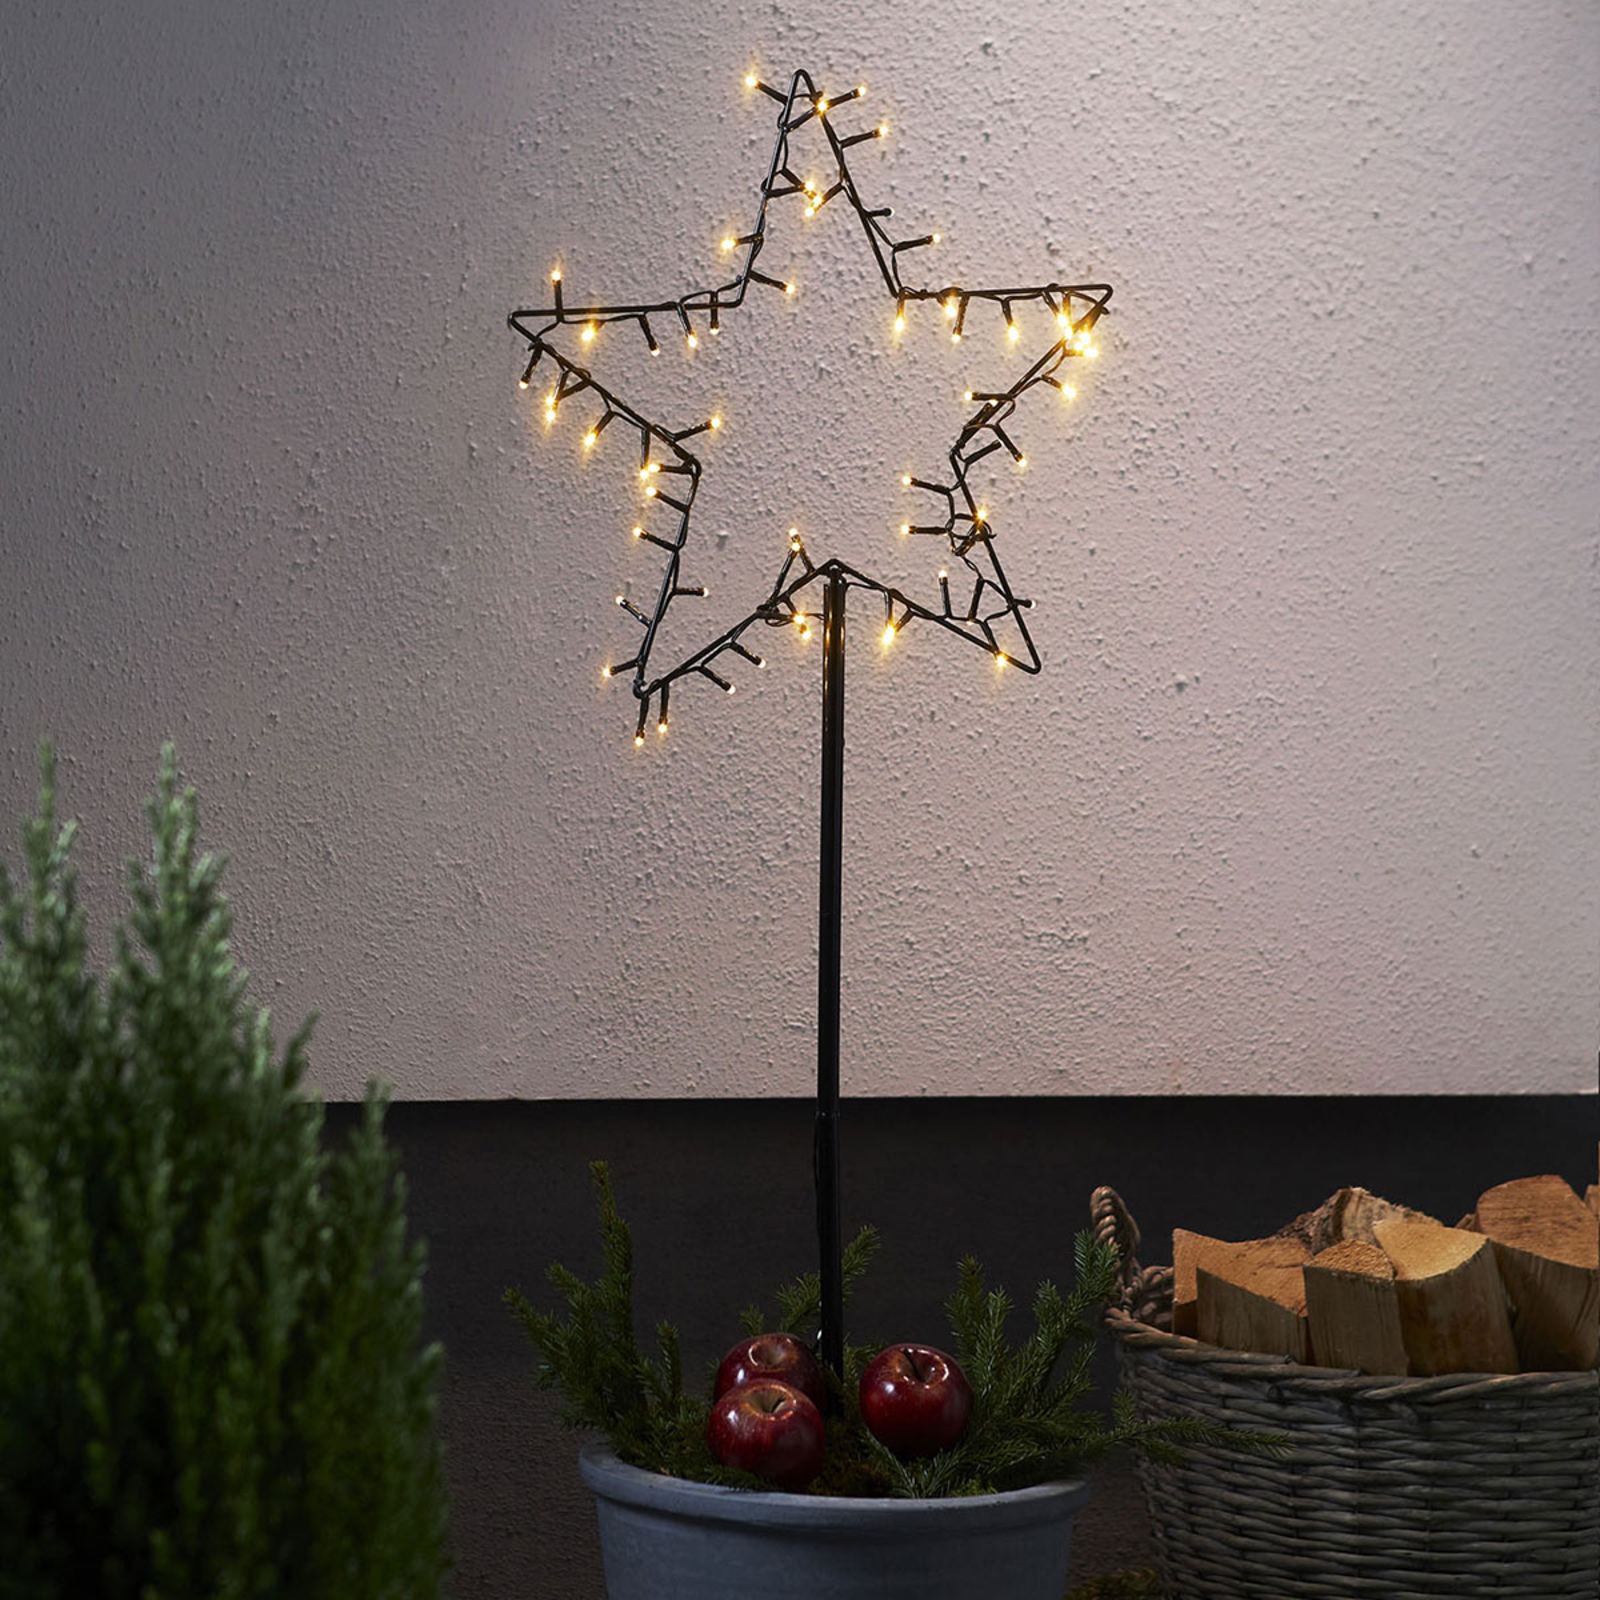 Estrella decorativa LED Spiky exterior, pilas